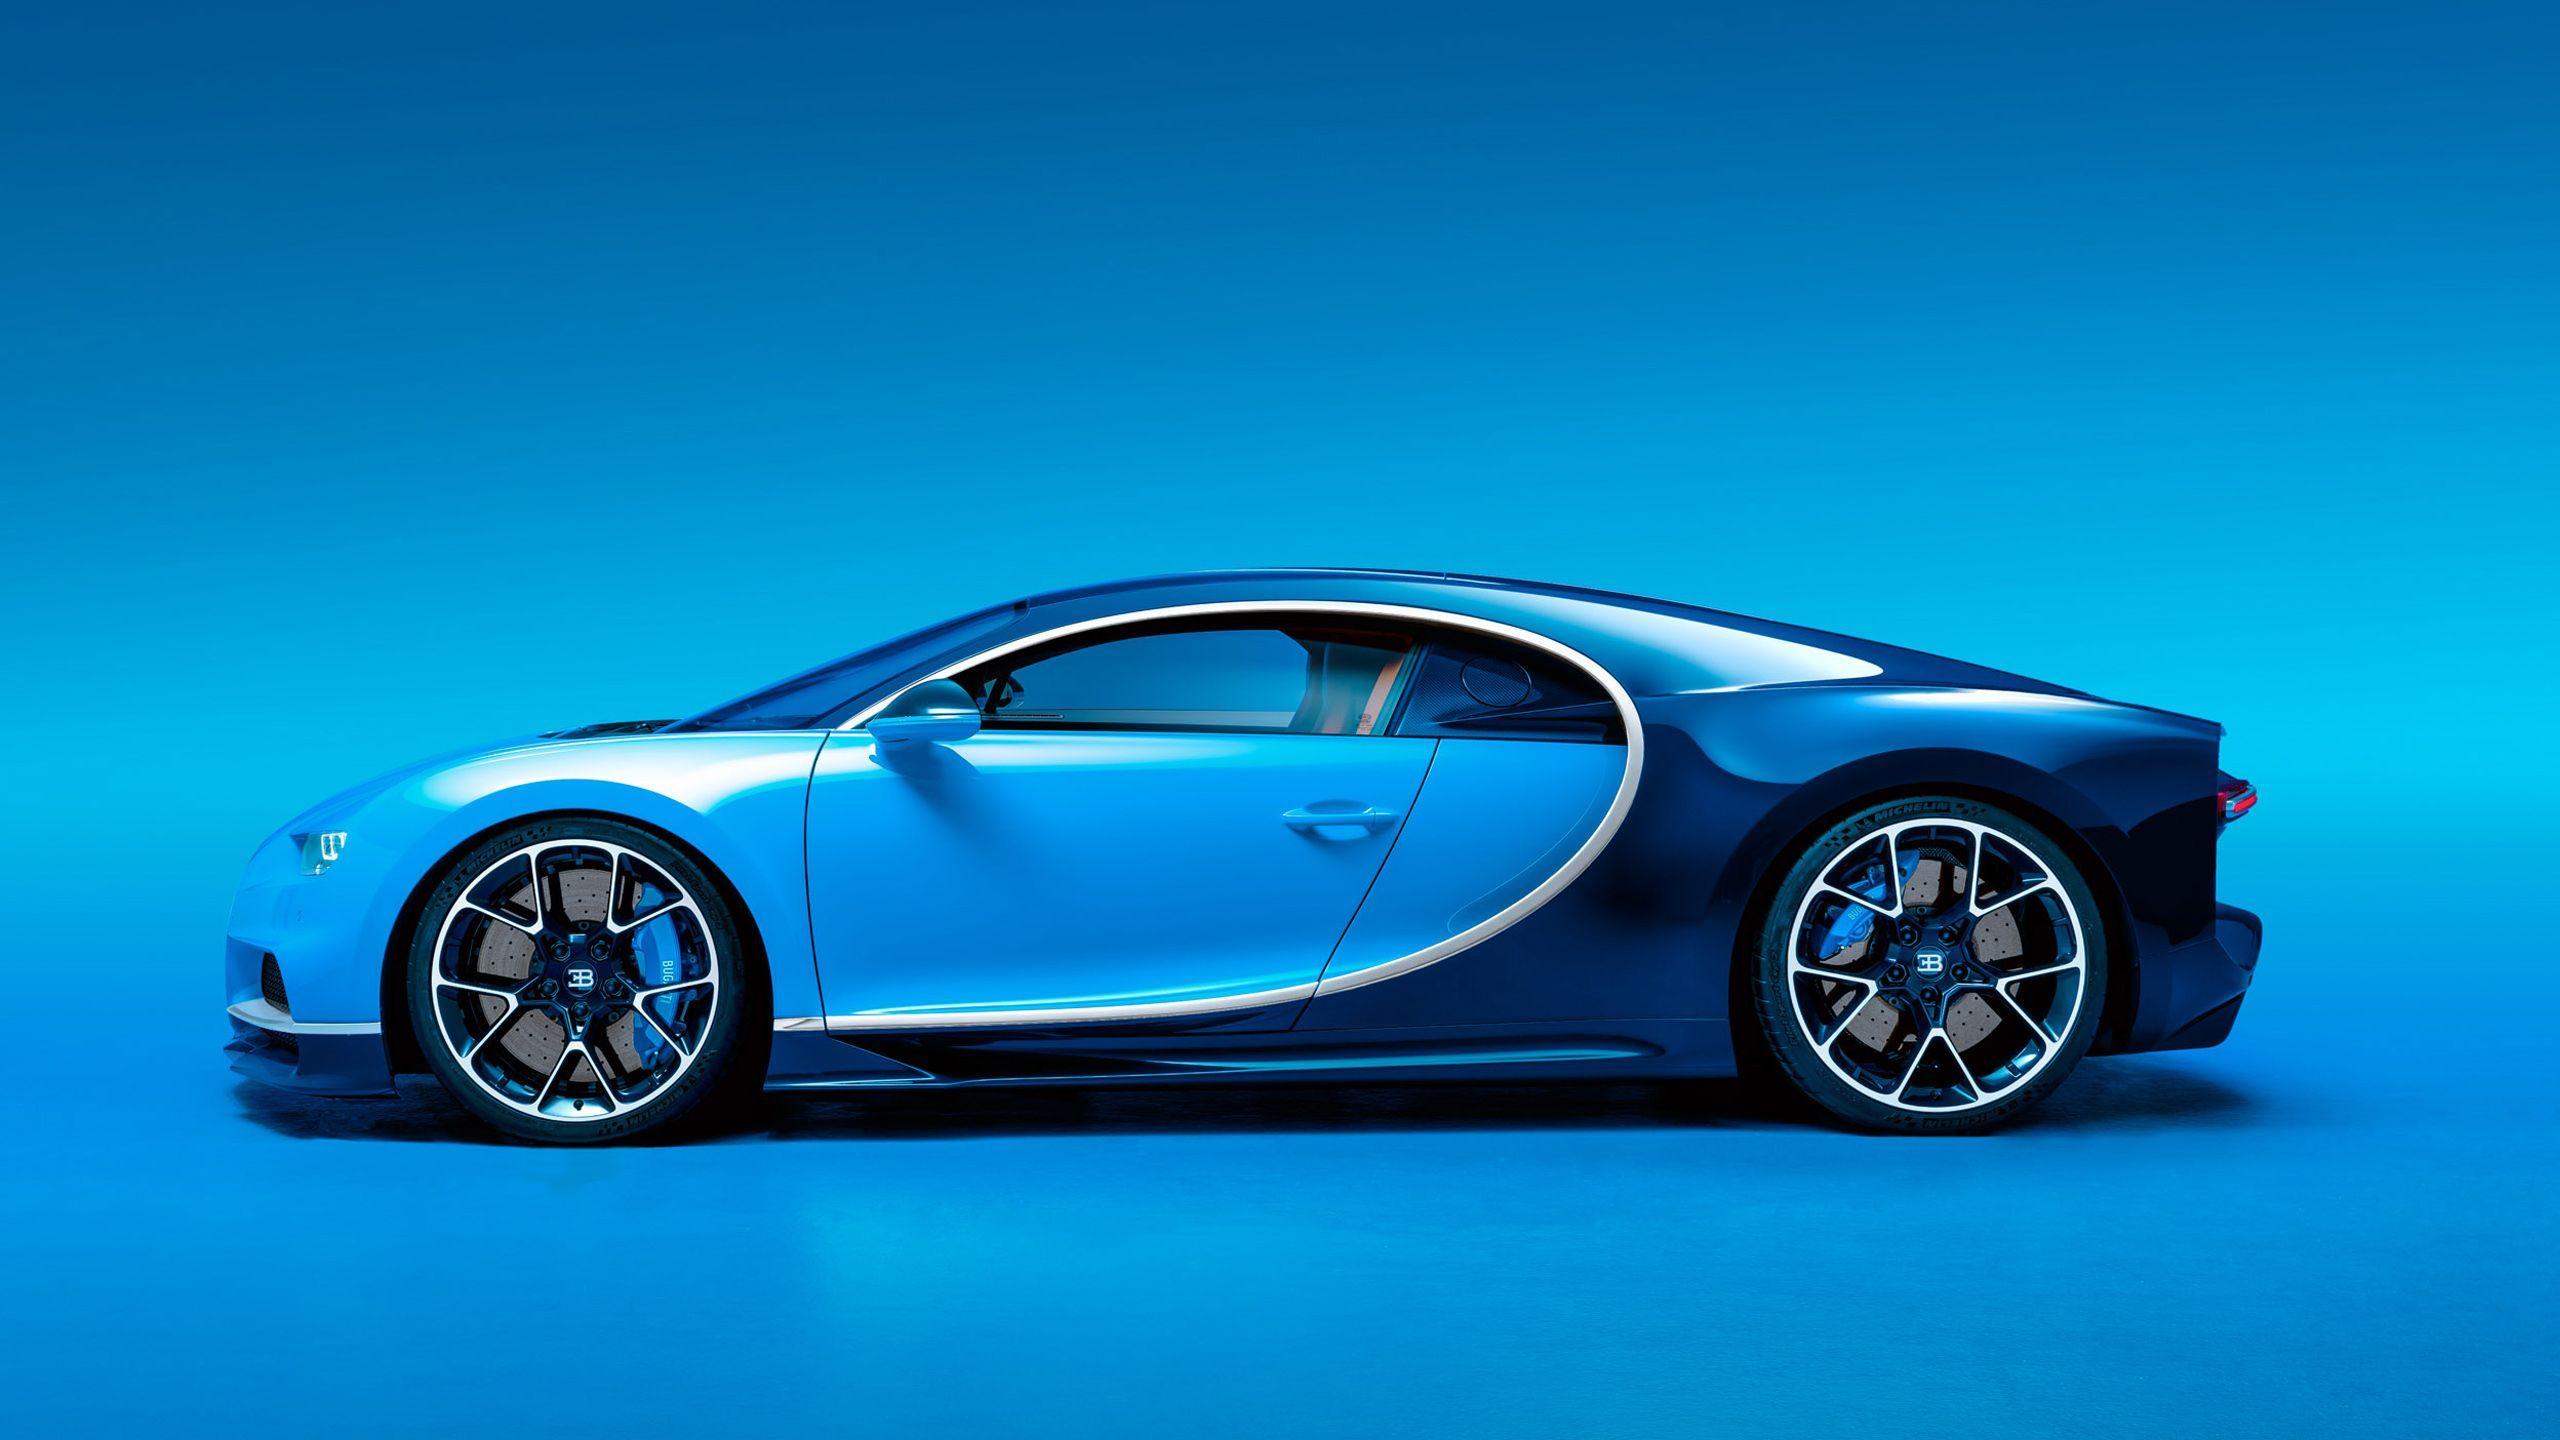 Bugatti Image Is Cool